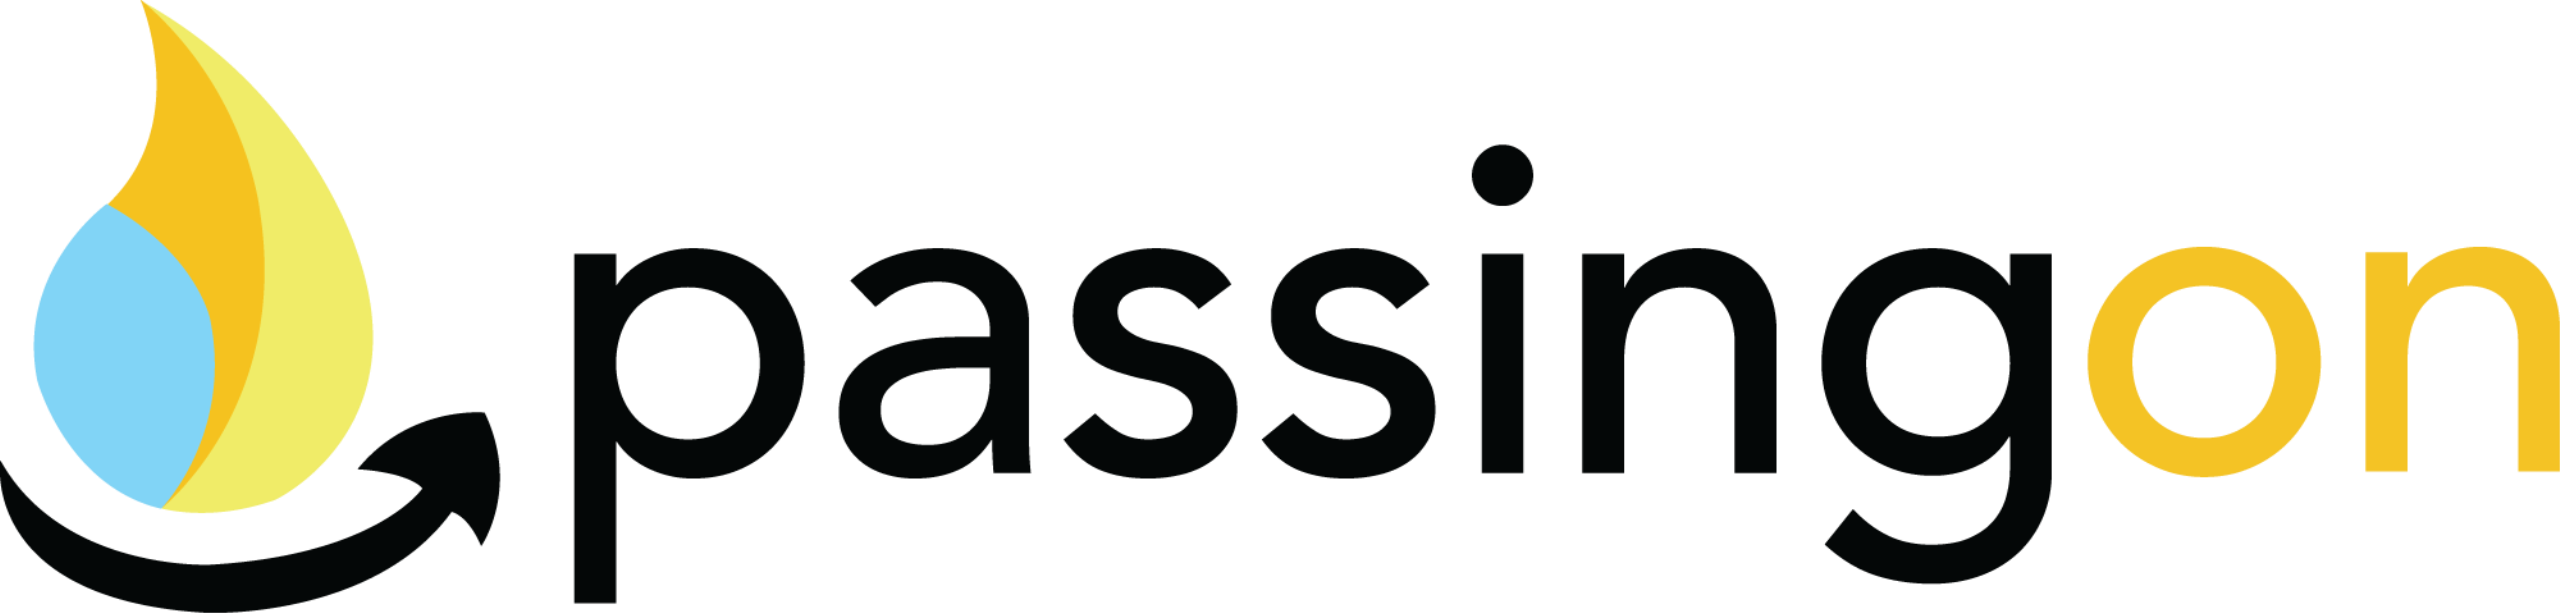 Passingon Funeral Services Inc. Logo